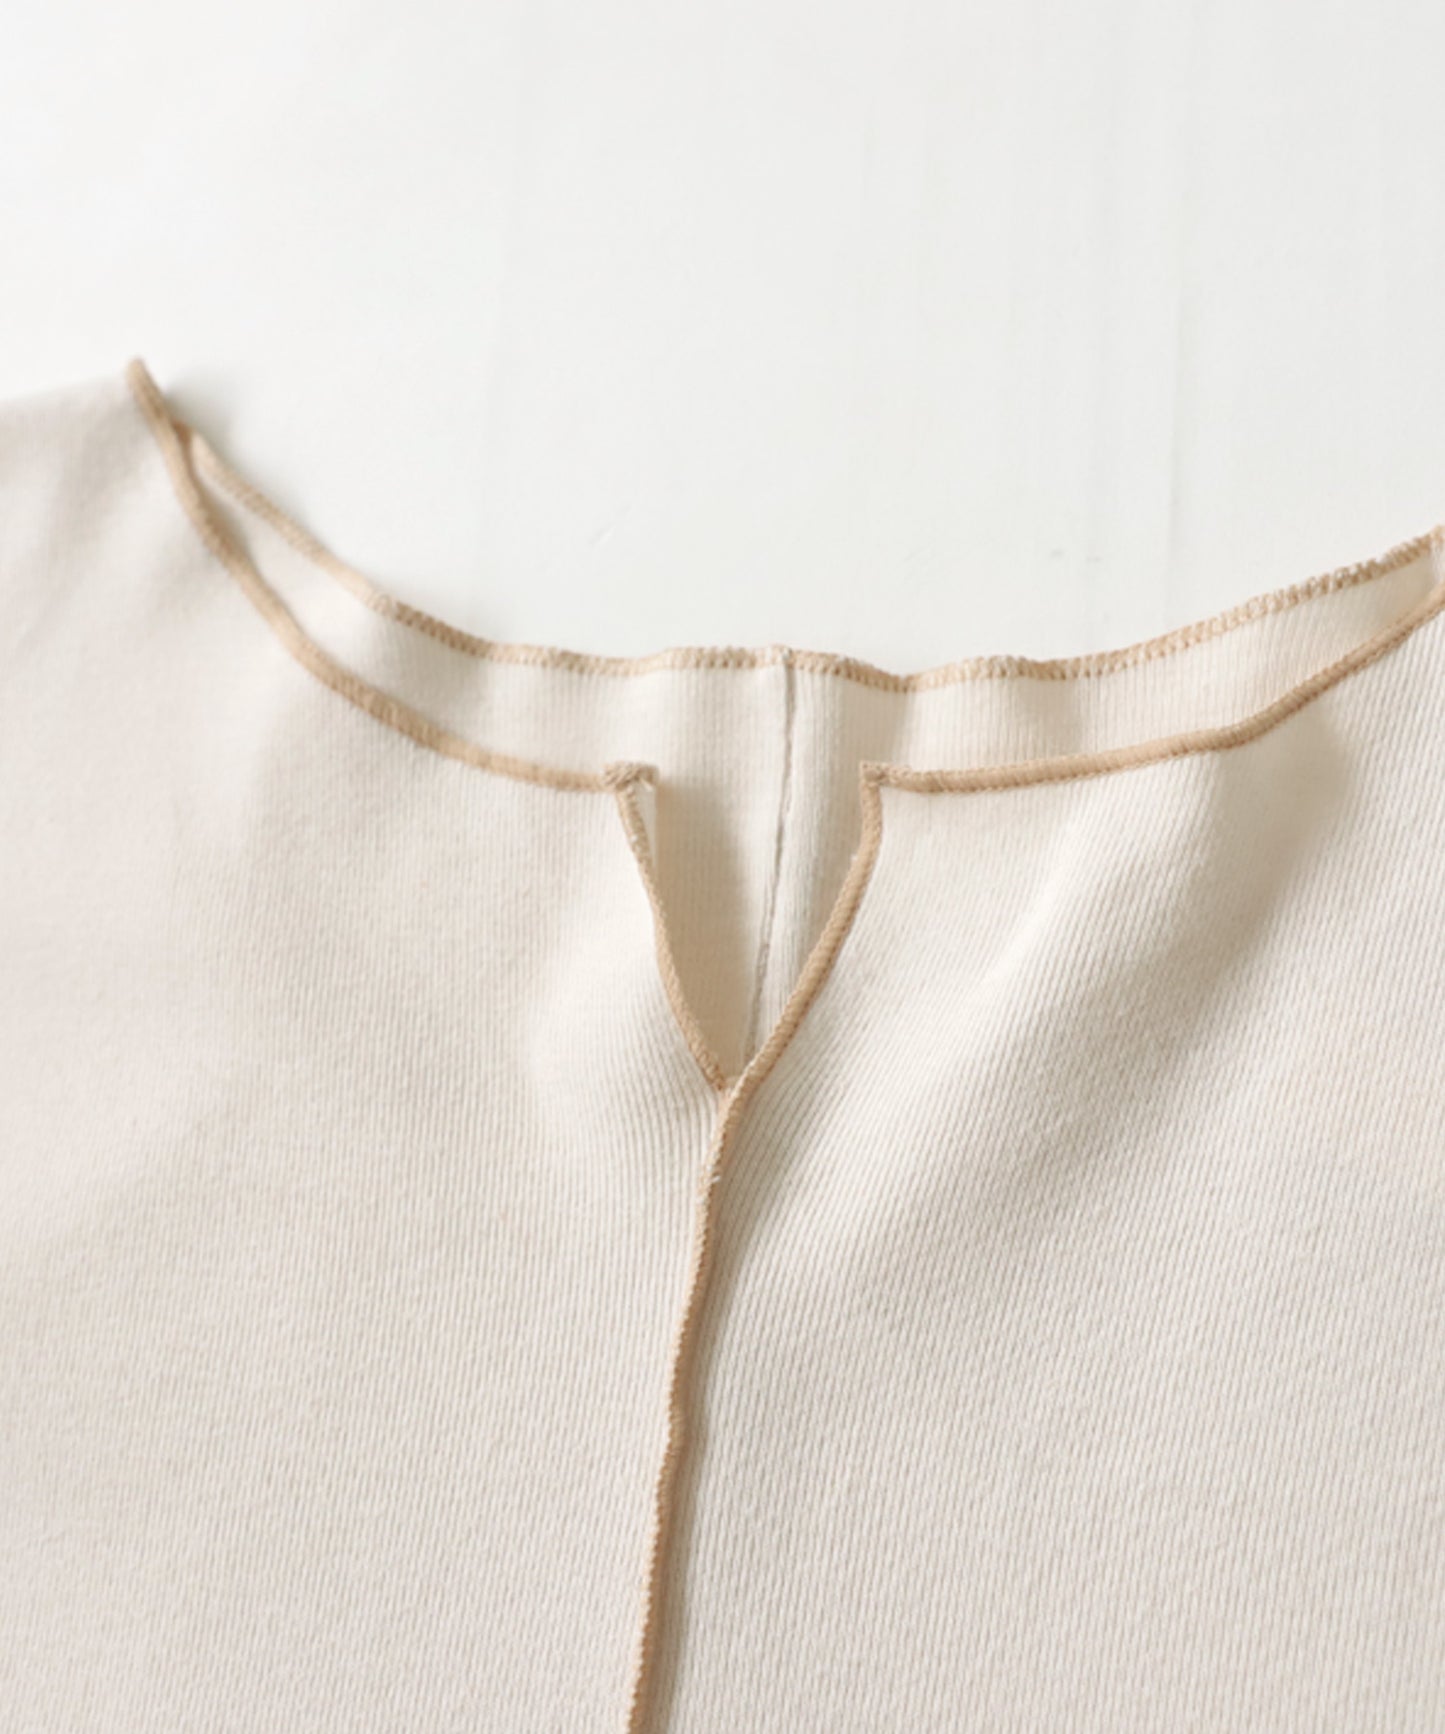 Circular rib fabric Tops Long-sleeved Ladies T-shirt Cotton 100%